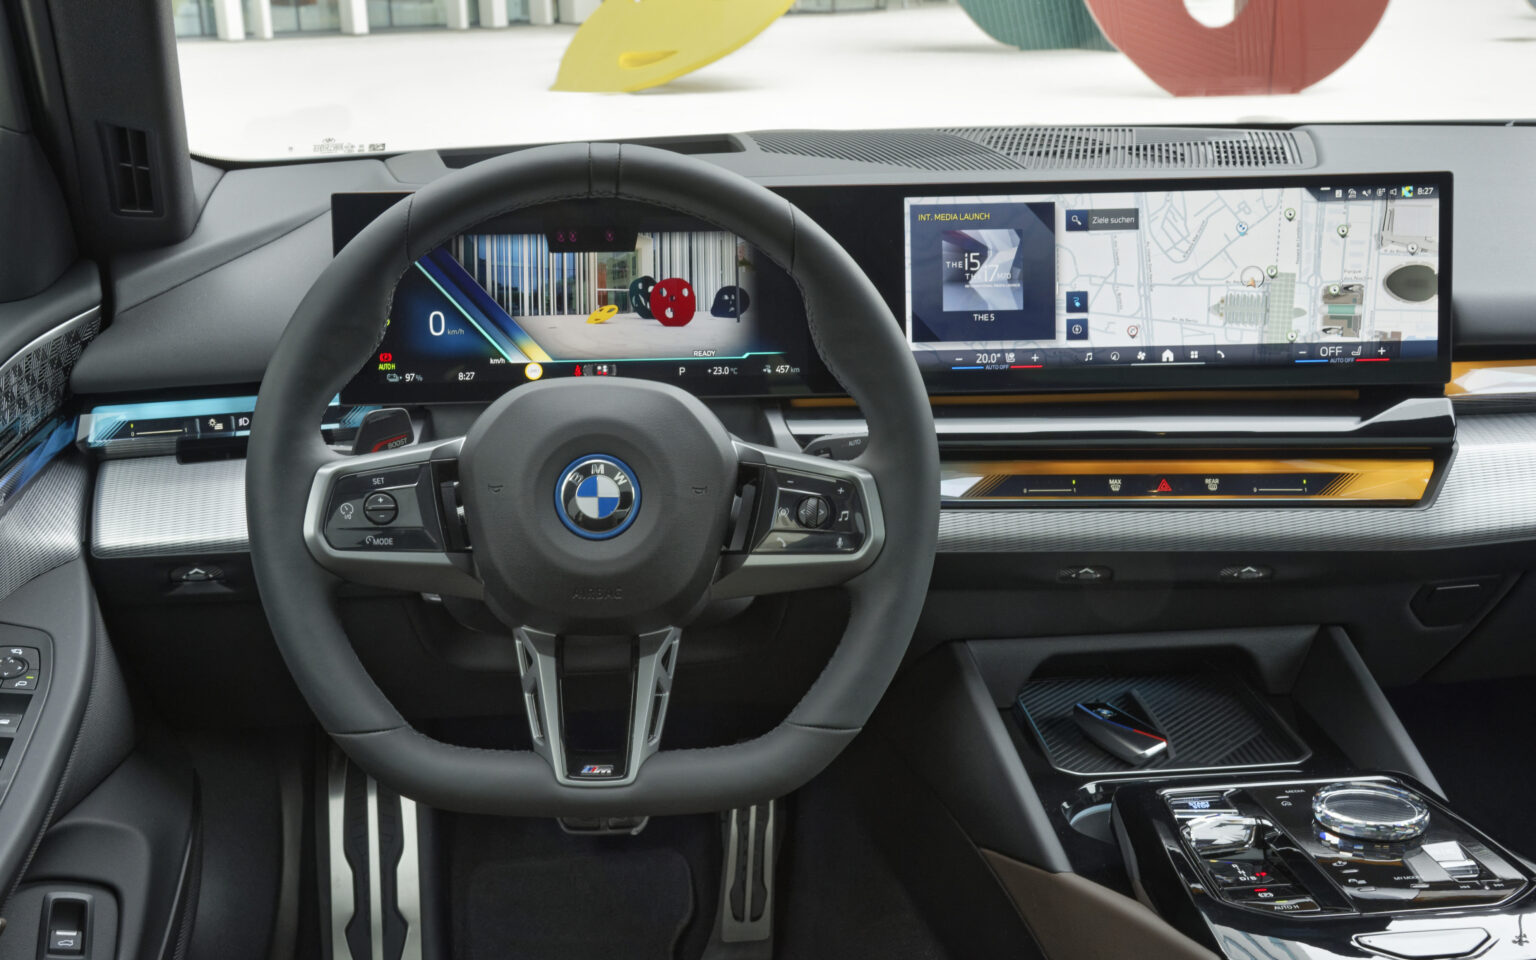 BMW i5 BMW financial report interior image 2